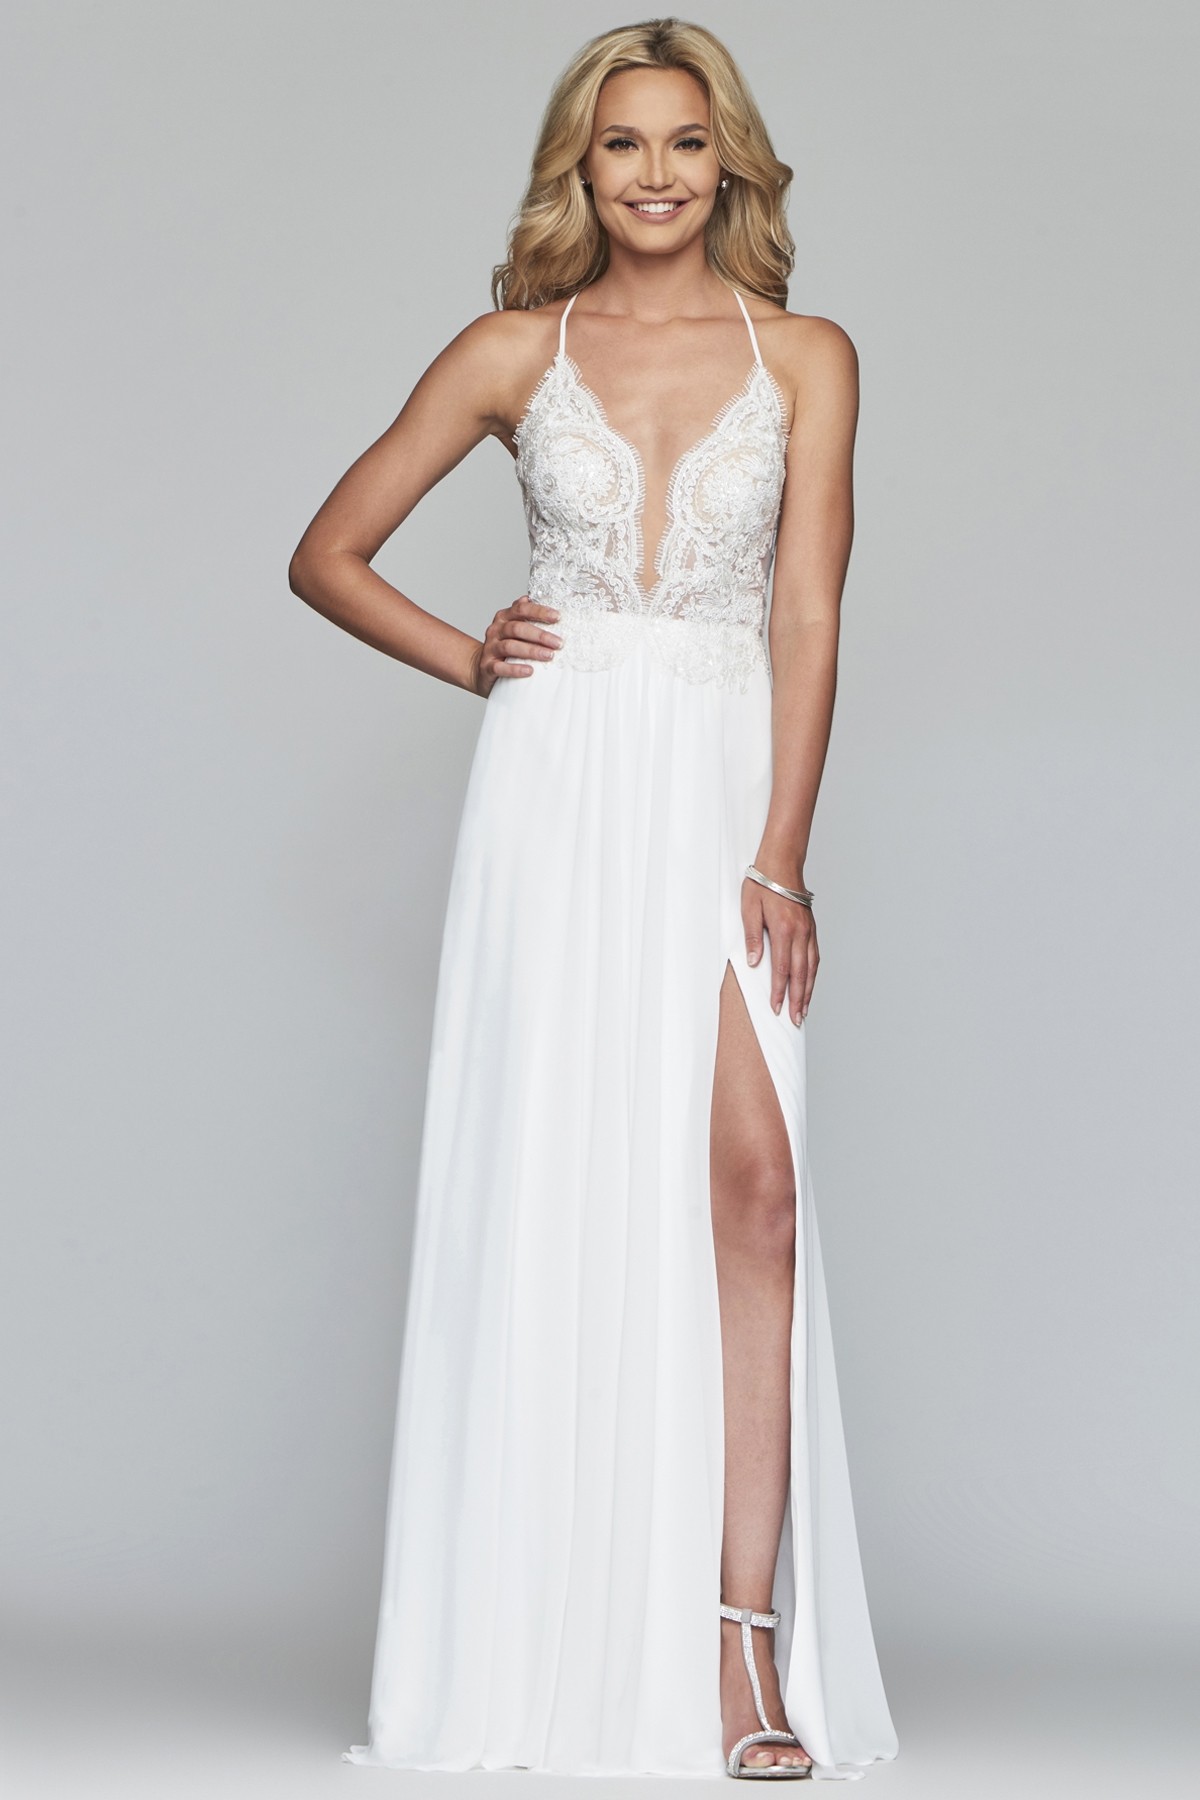 Faviana S10228 Prom Dress